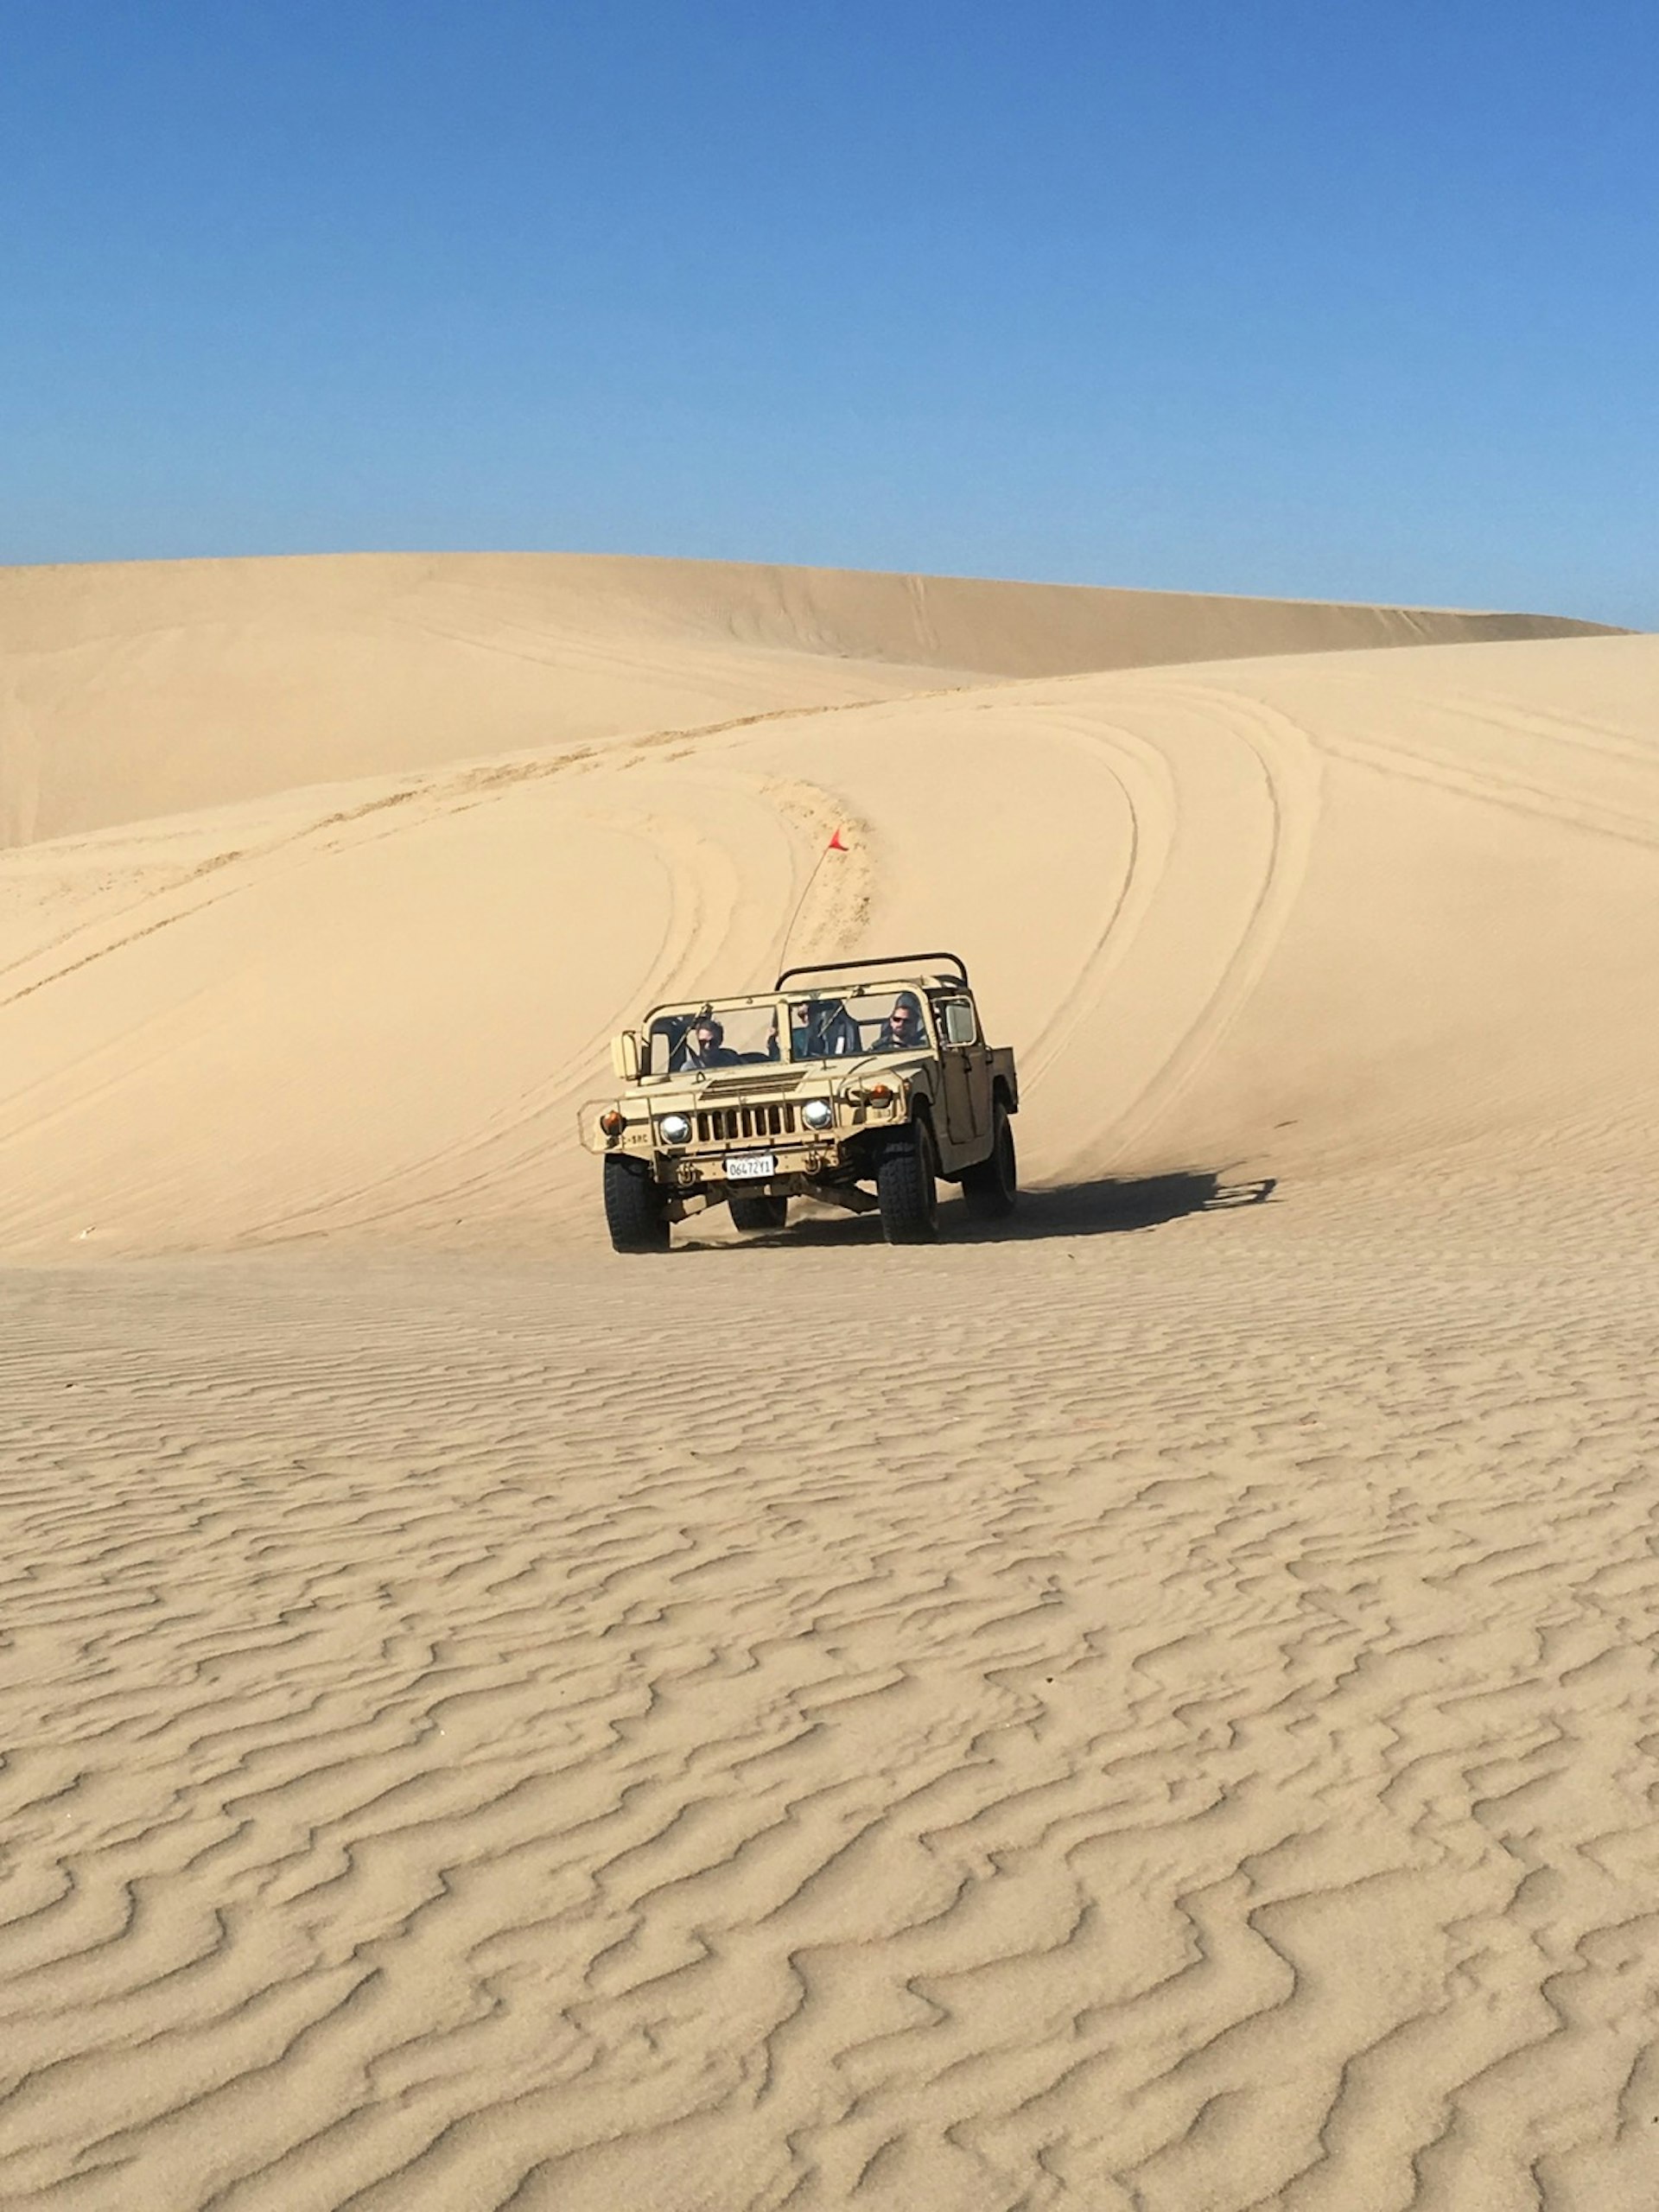 A tan humvee rolls over sand dunes; San Luis Obispo adventures